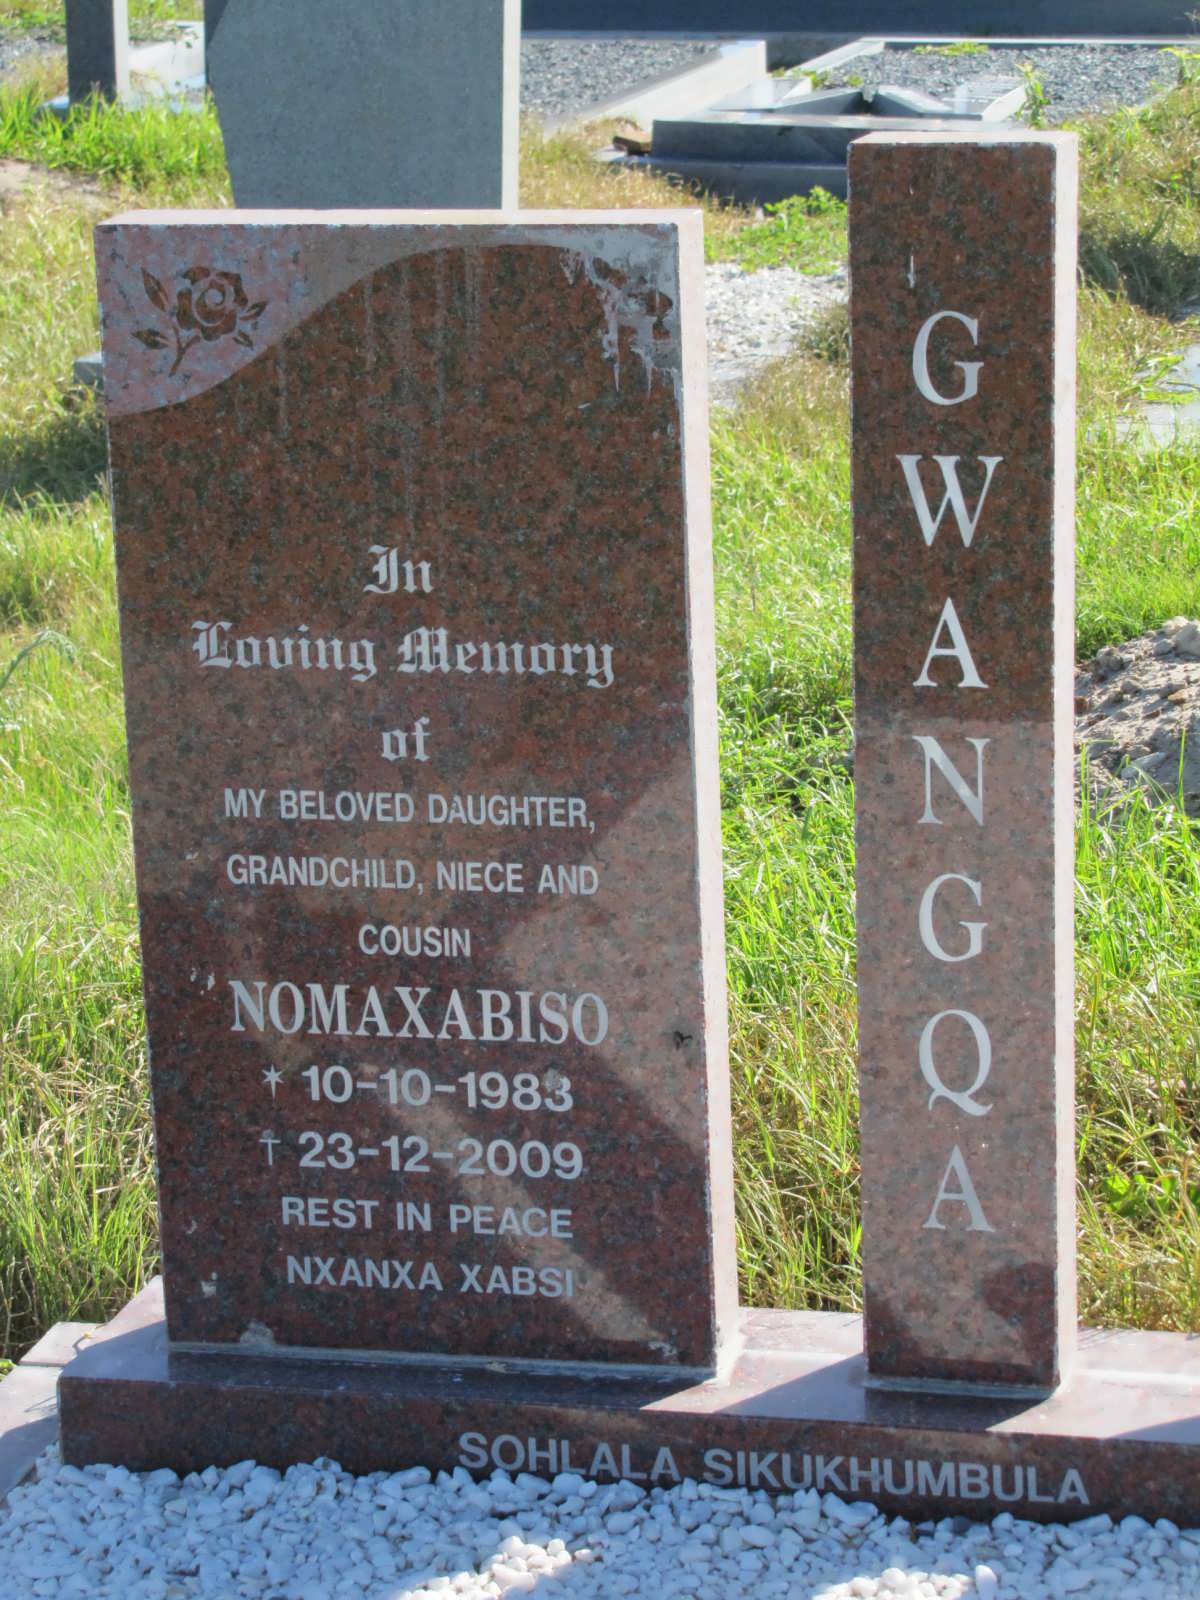 GWANGQA Nomaxabiso 1983-2009